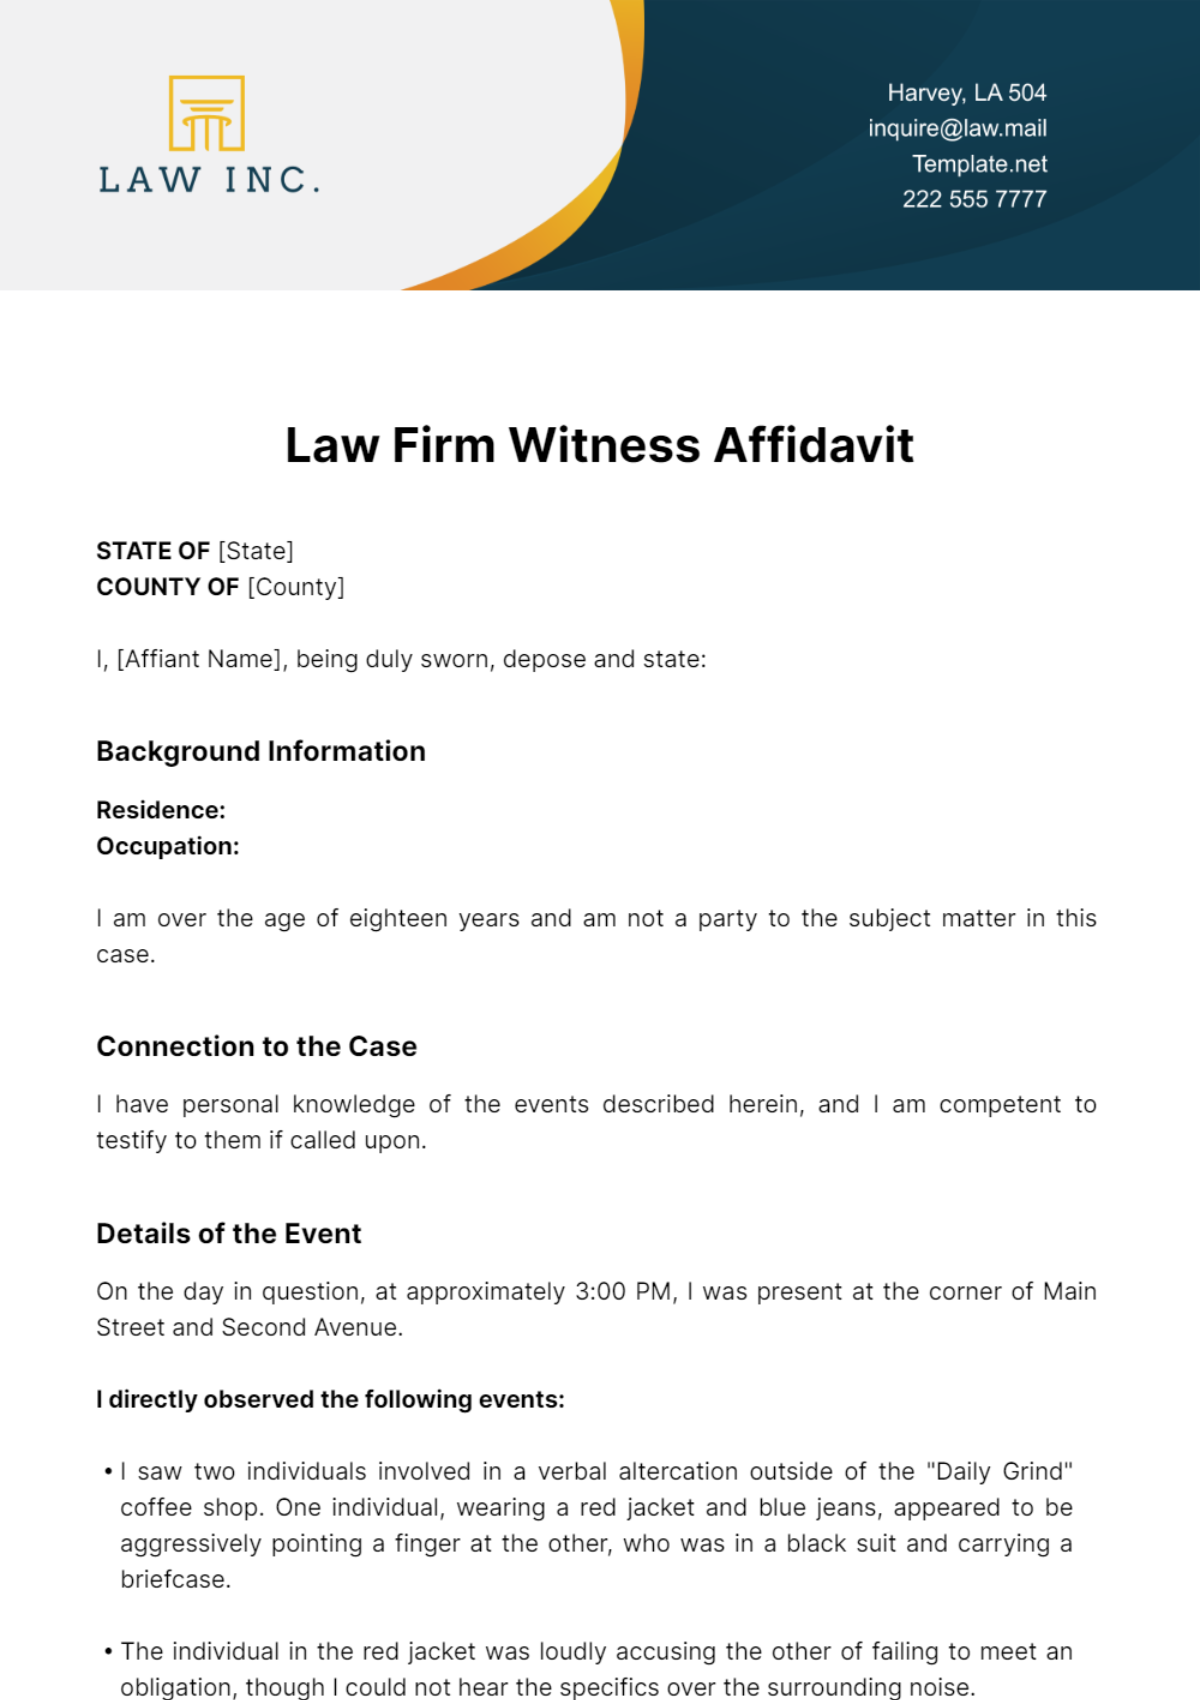 Law Firm Witness Affidavit Template